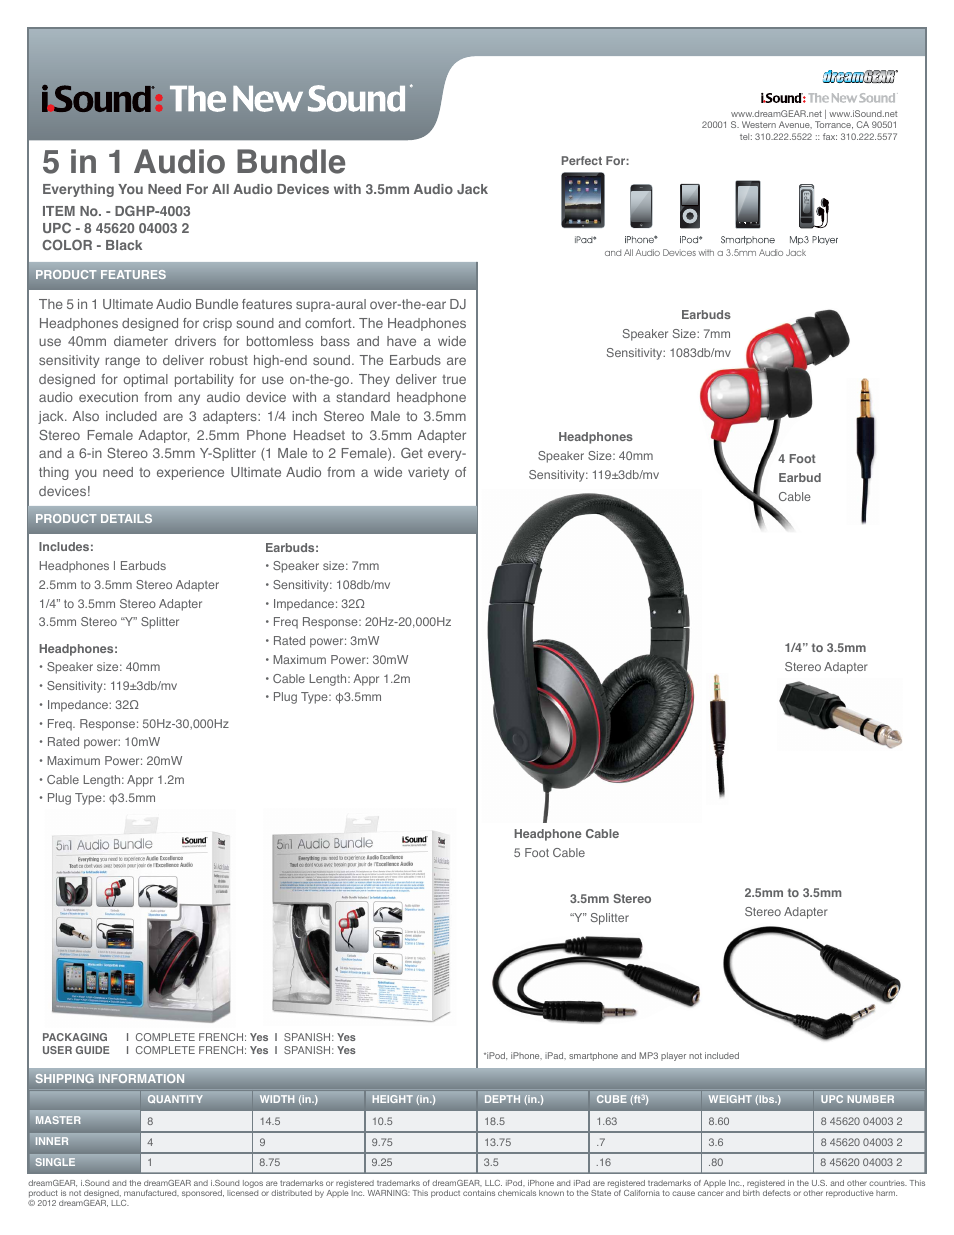 5 in 1 Audio Bundle - Sell Sheet